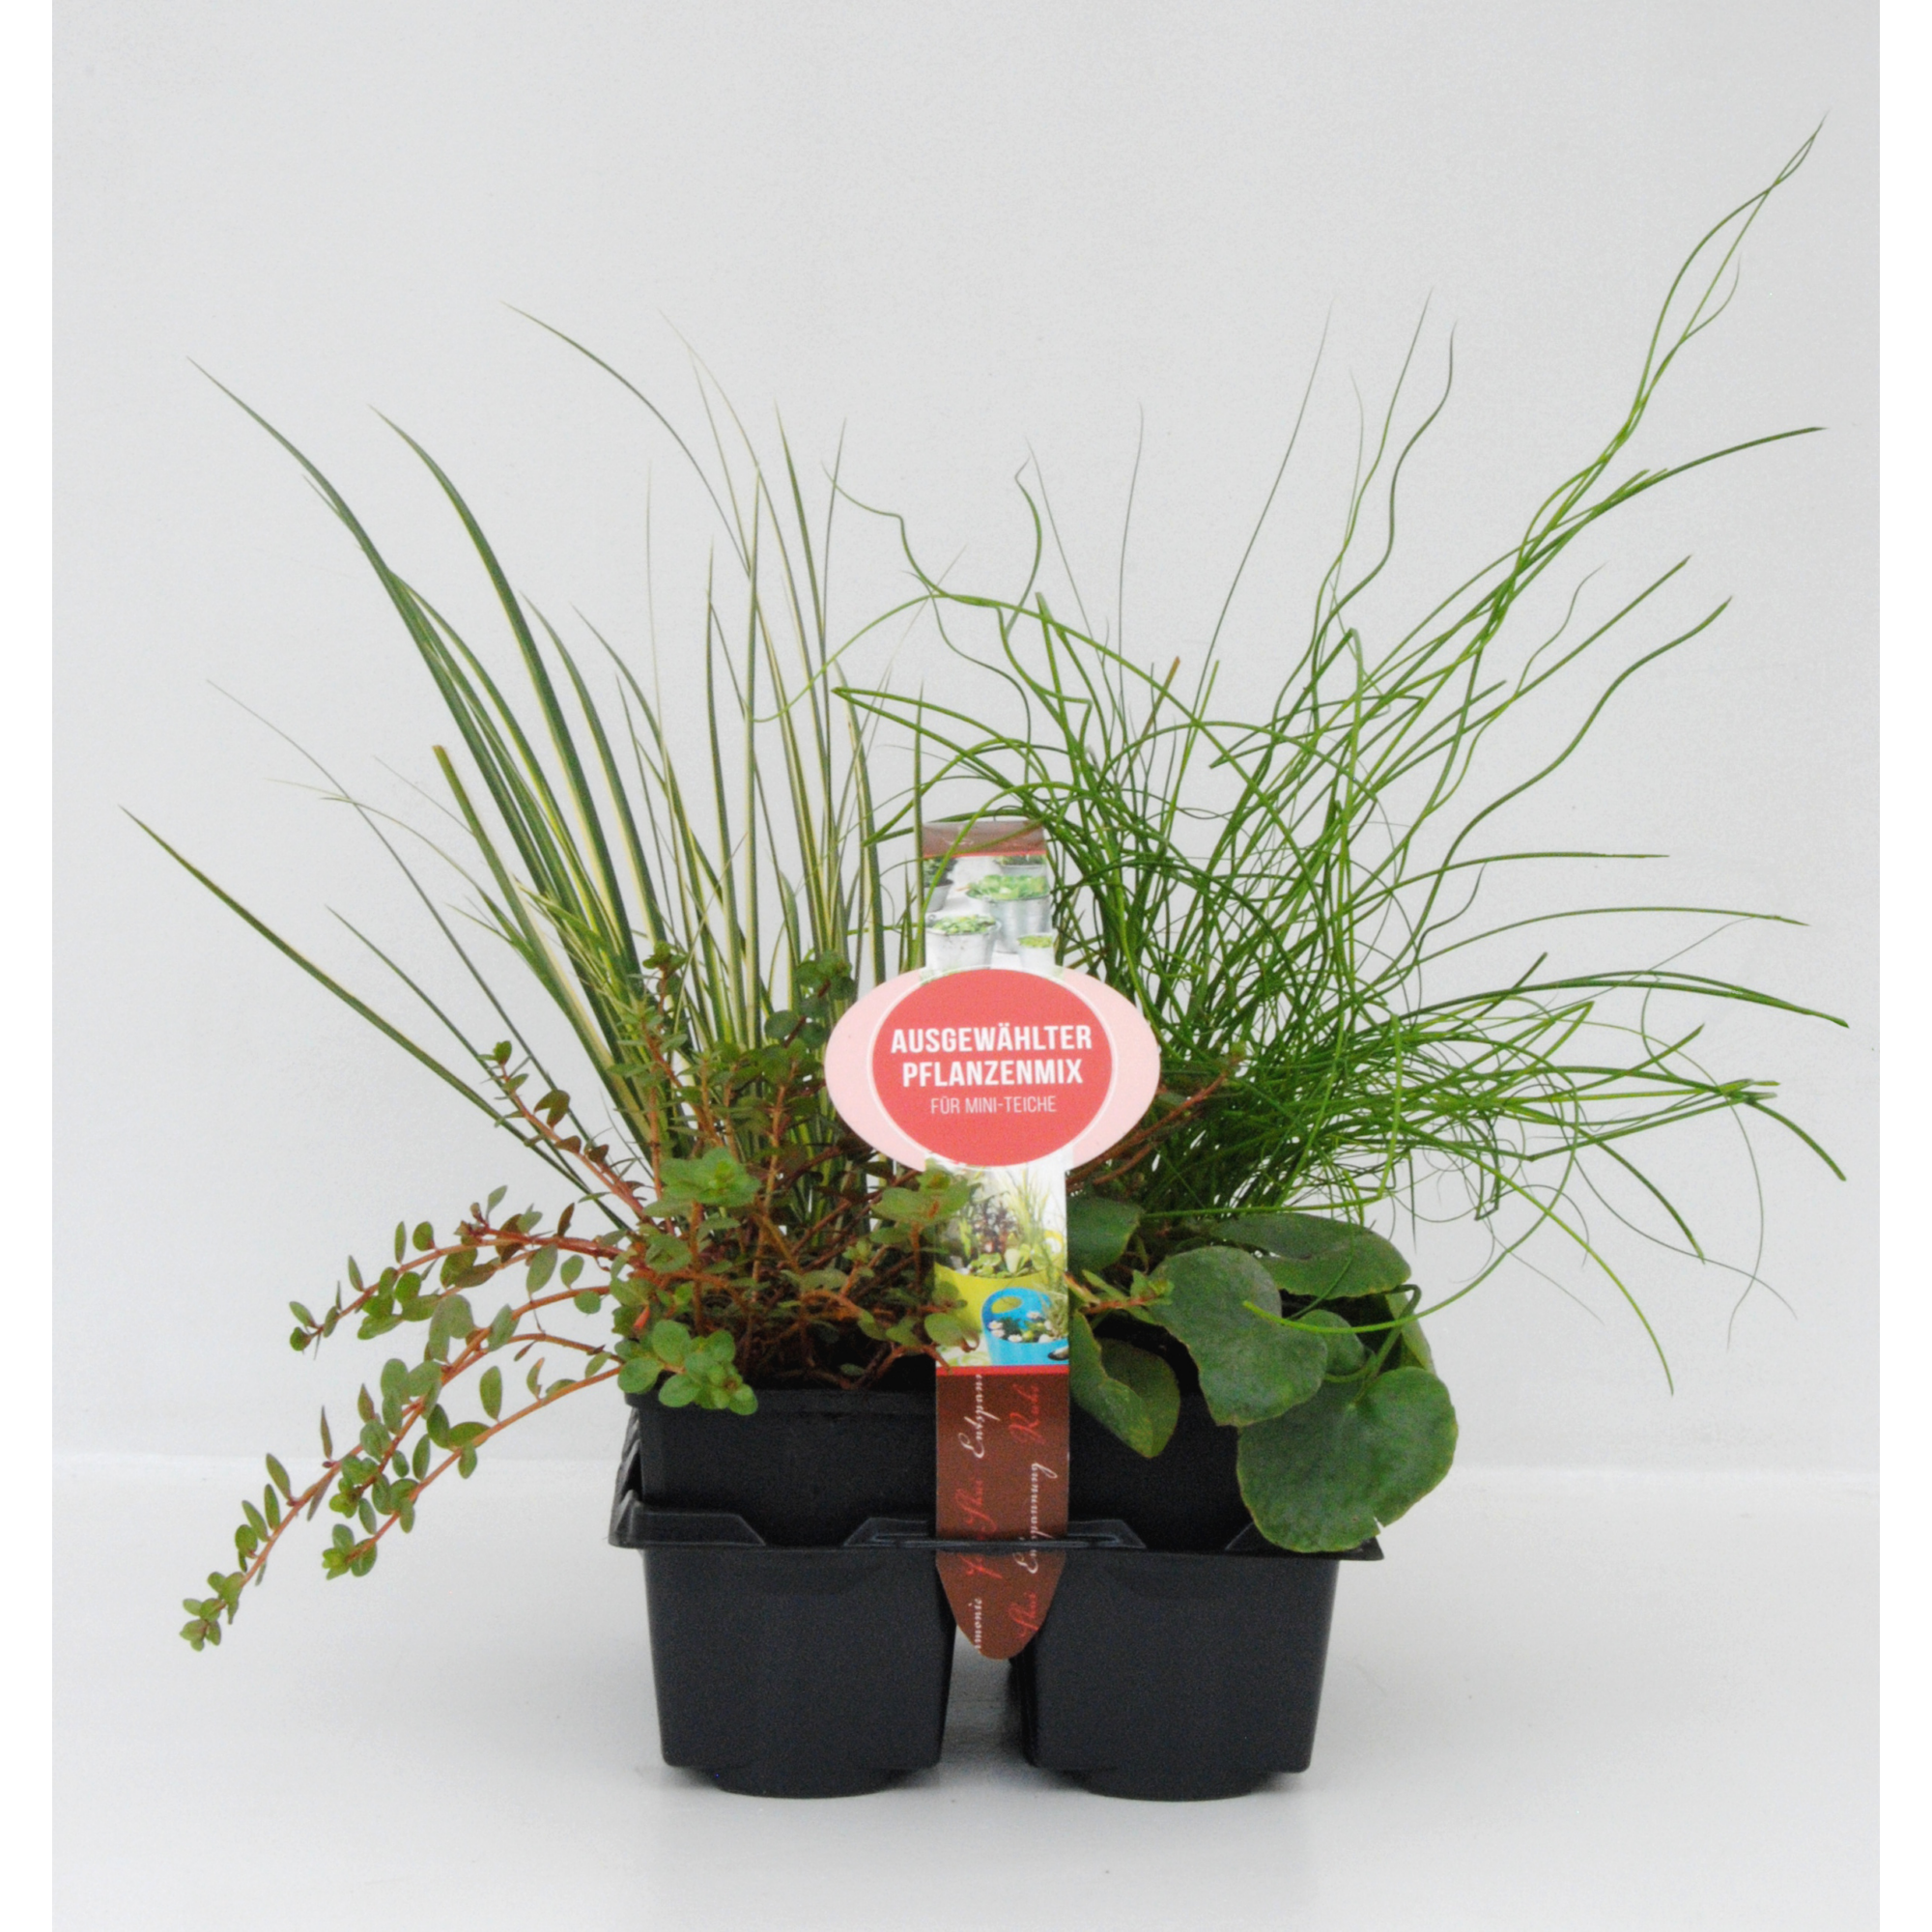 Miniteichset, 4 Pflanzen + product picture